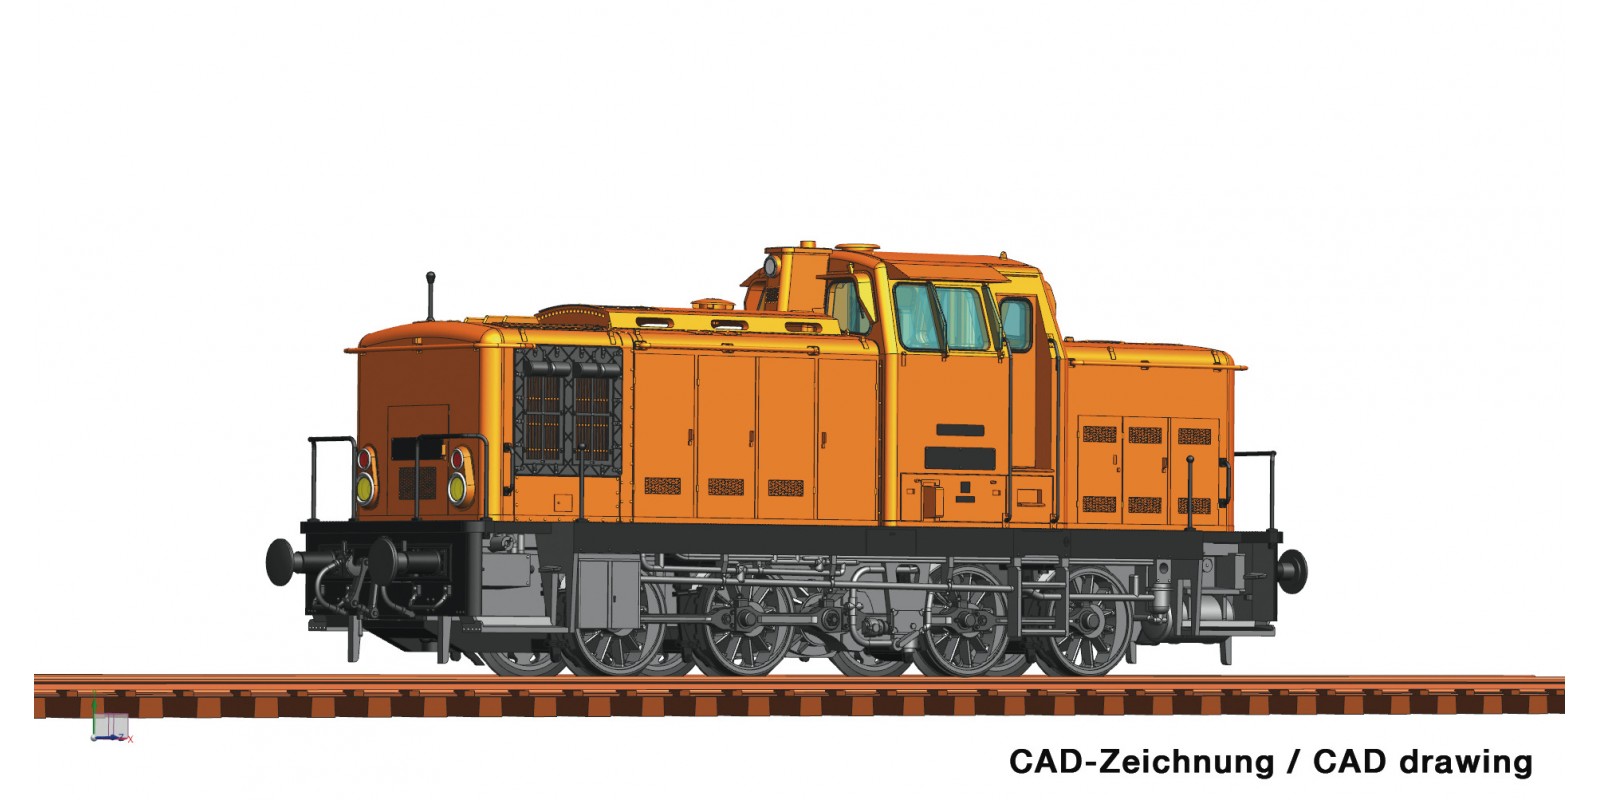 RO70266 Diesel locomotive class 106